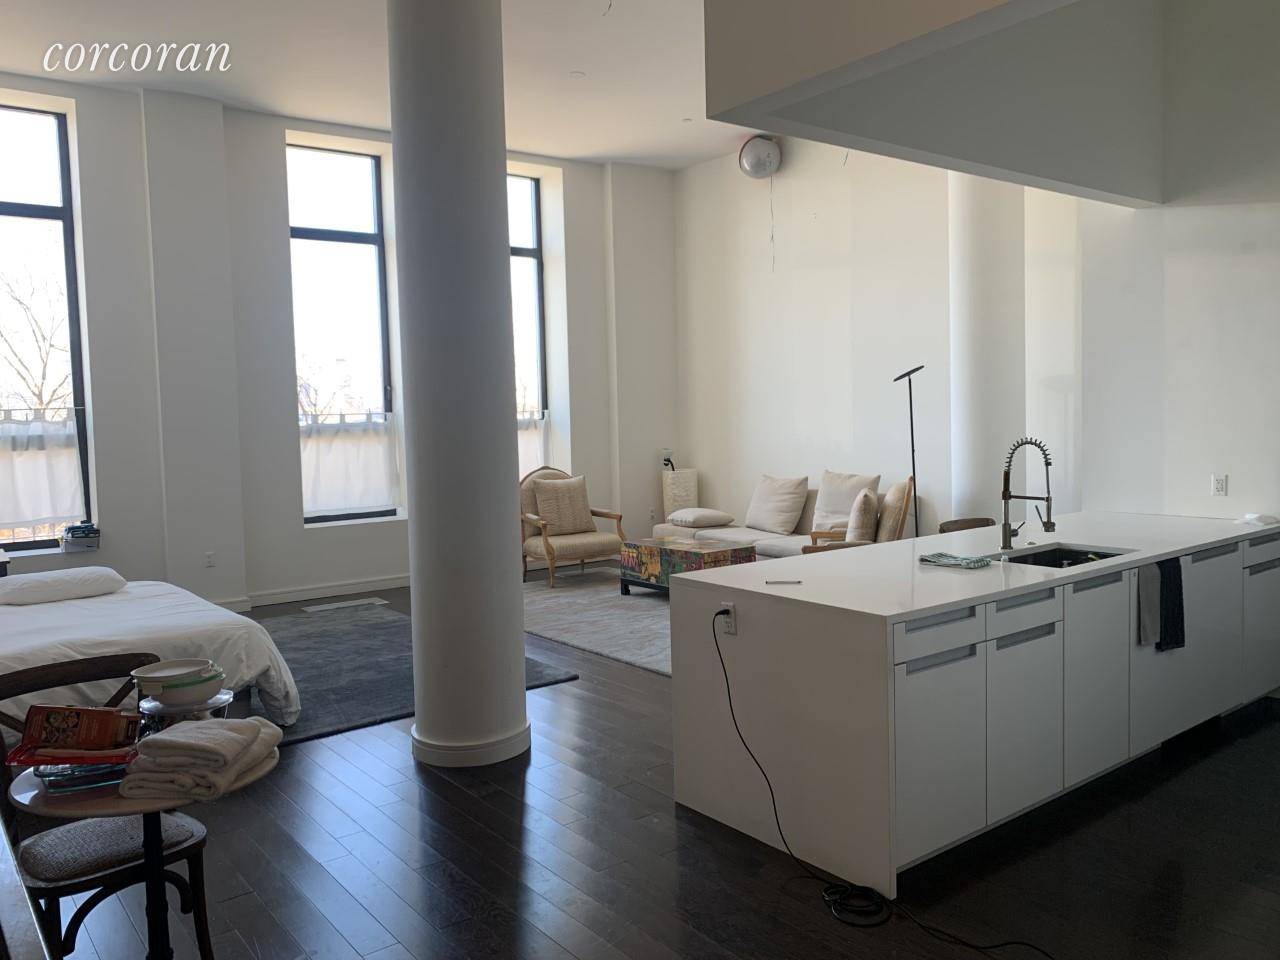 The loft style duplex apartment is 1385 sq.